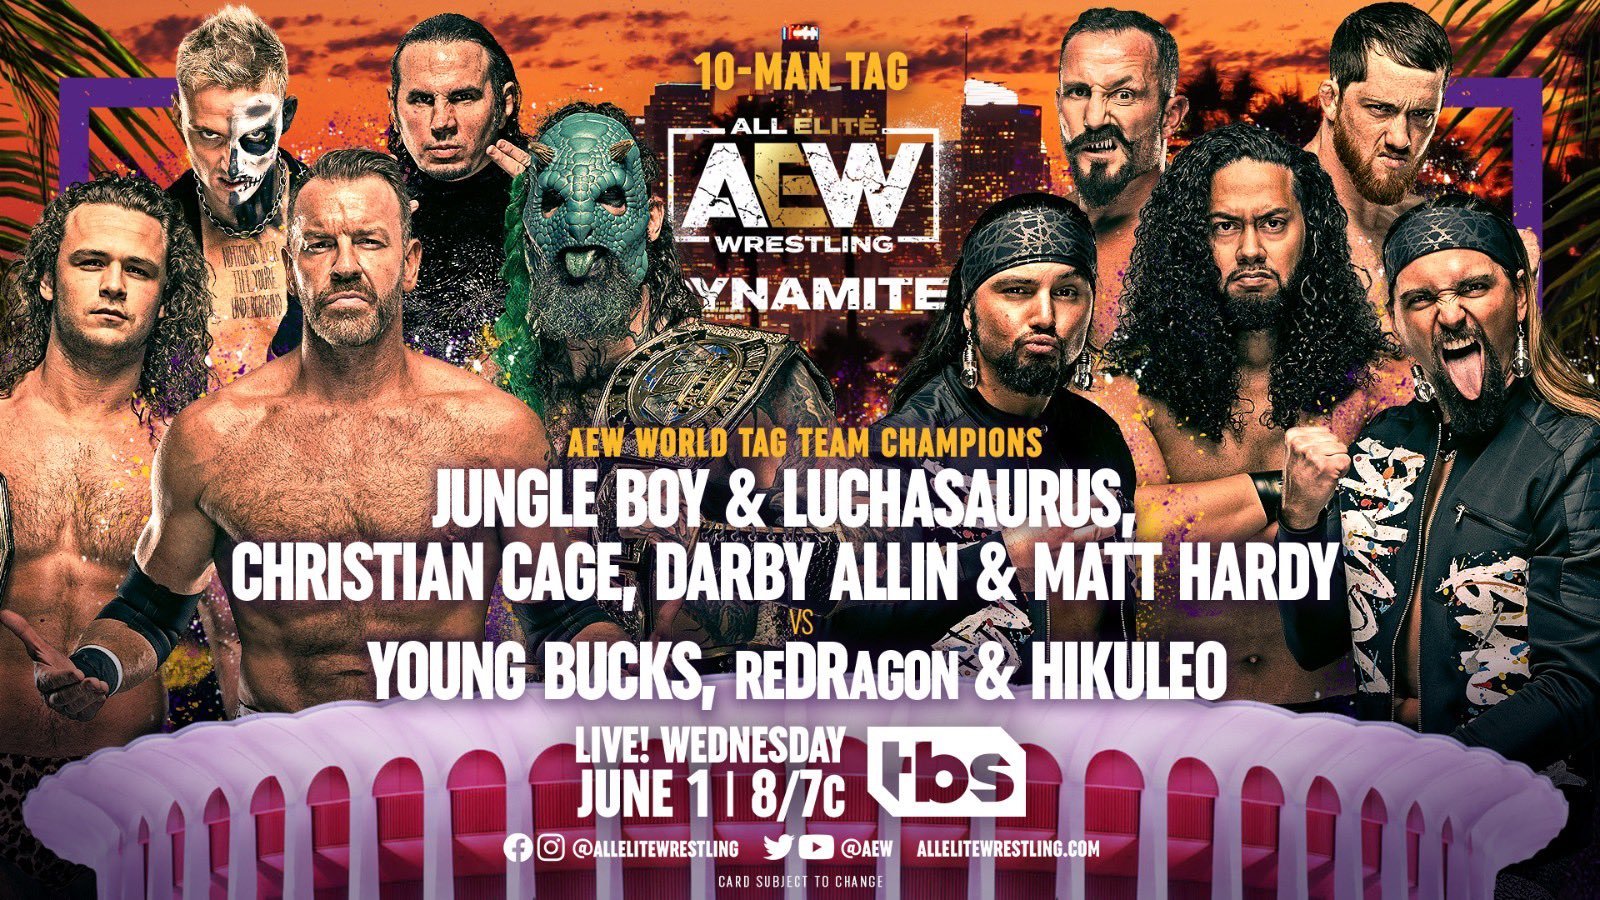 Tony Khan Confirms Adam Cole & Jeff Hardy “Injured” Ahead of AEW Dynamite